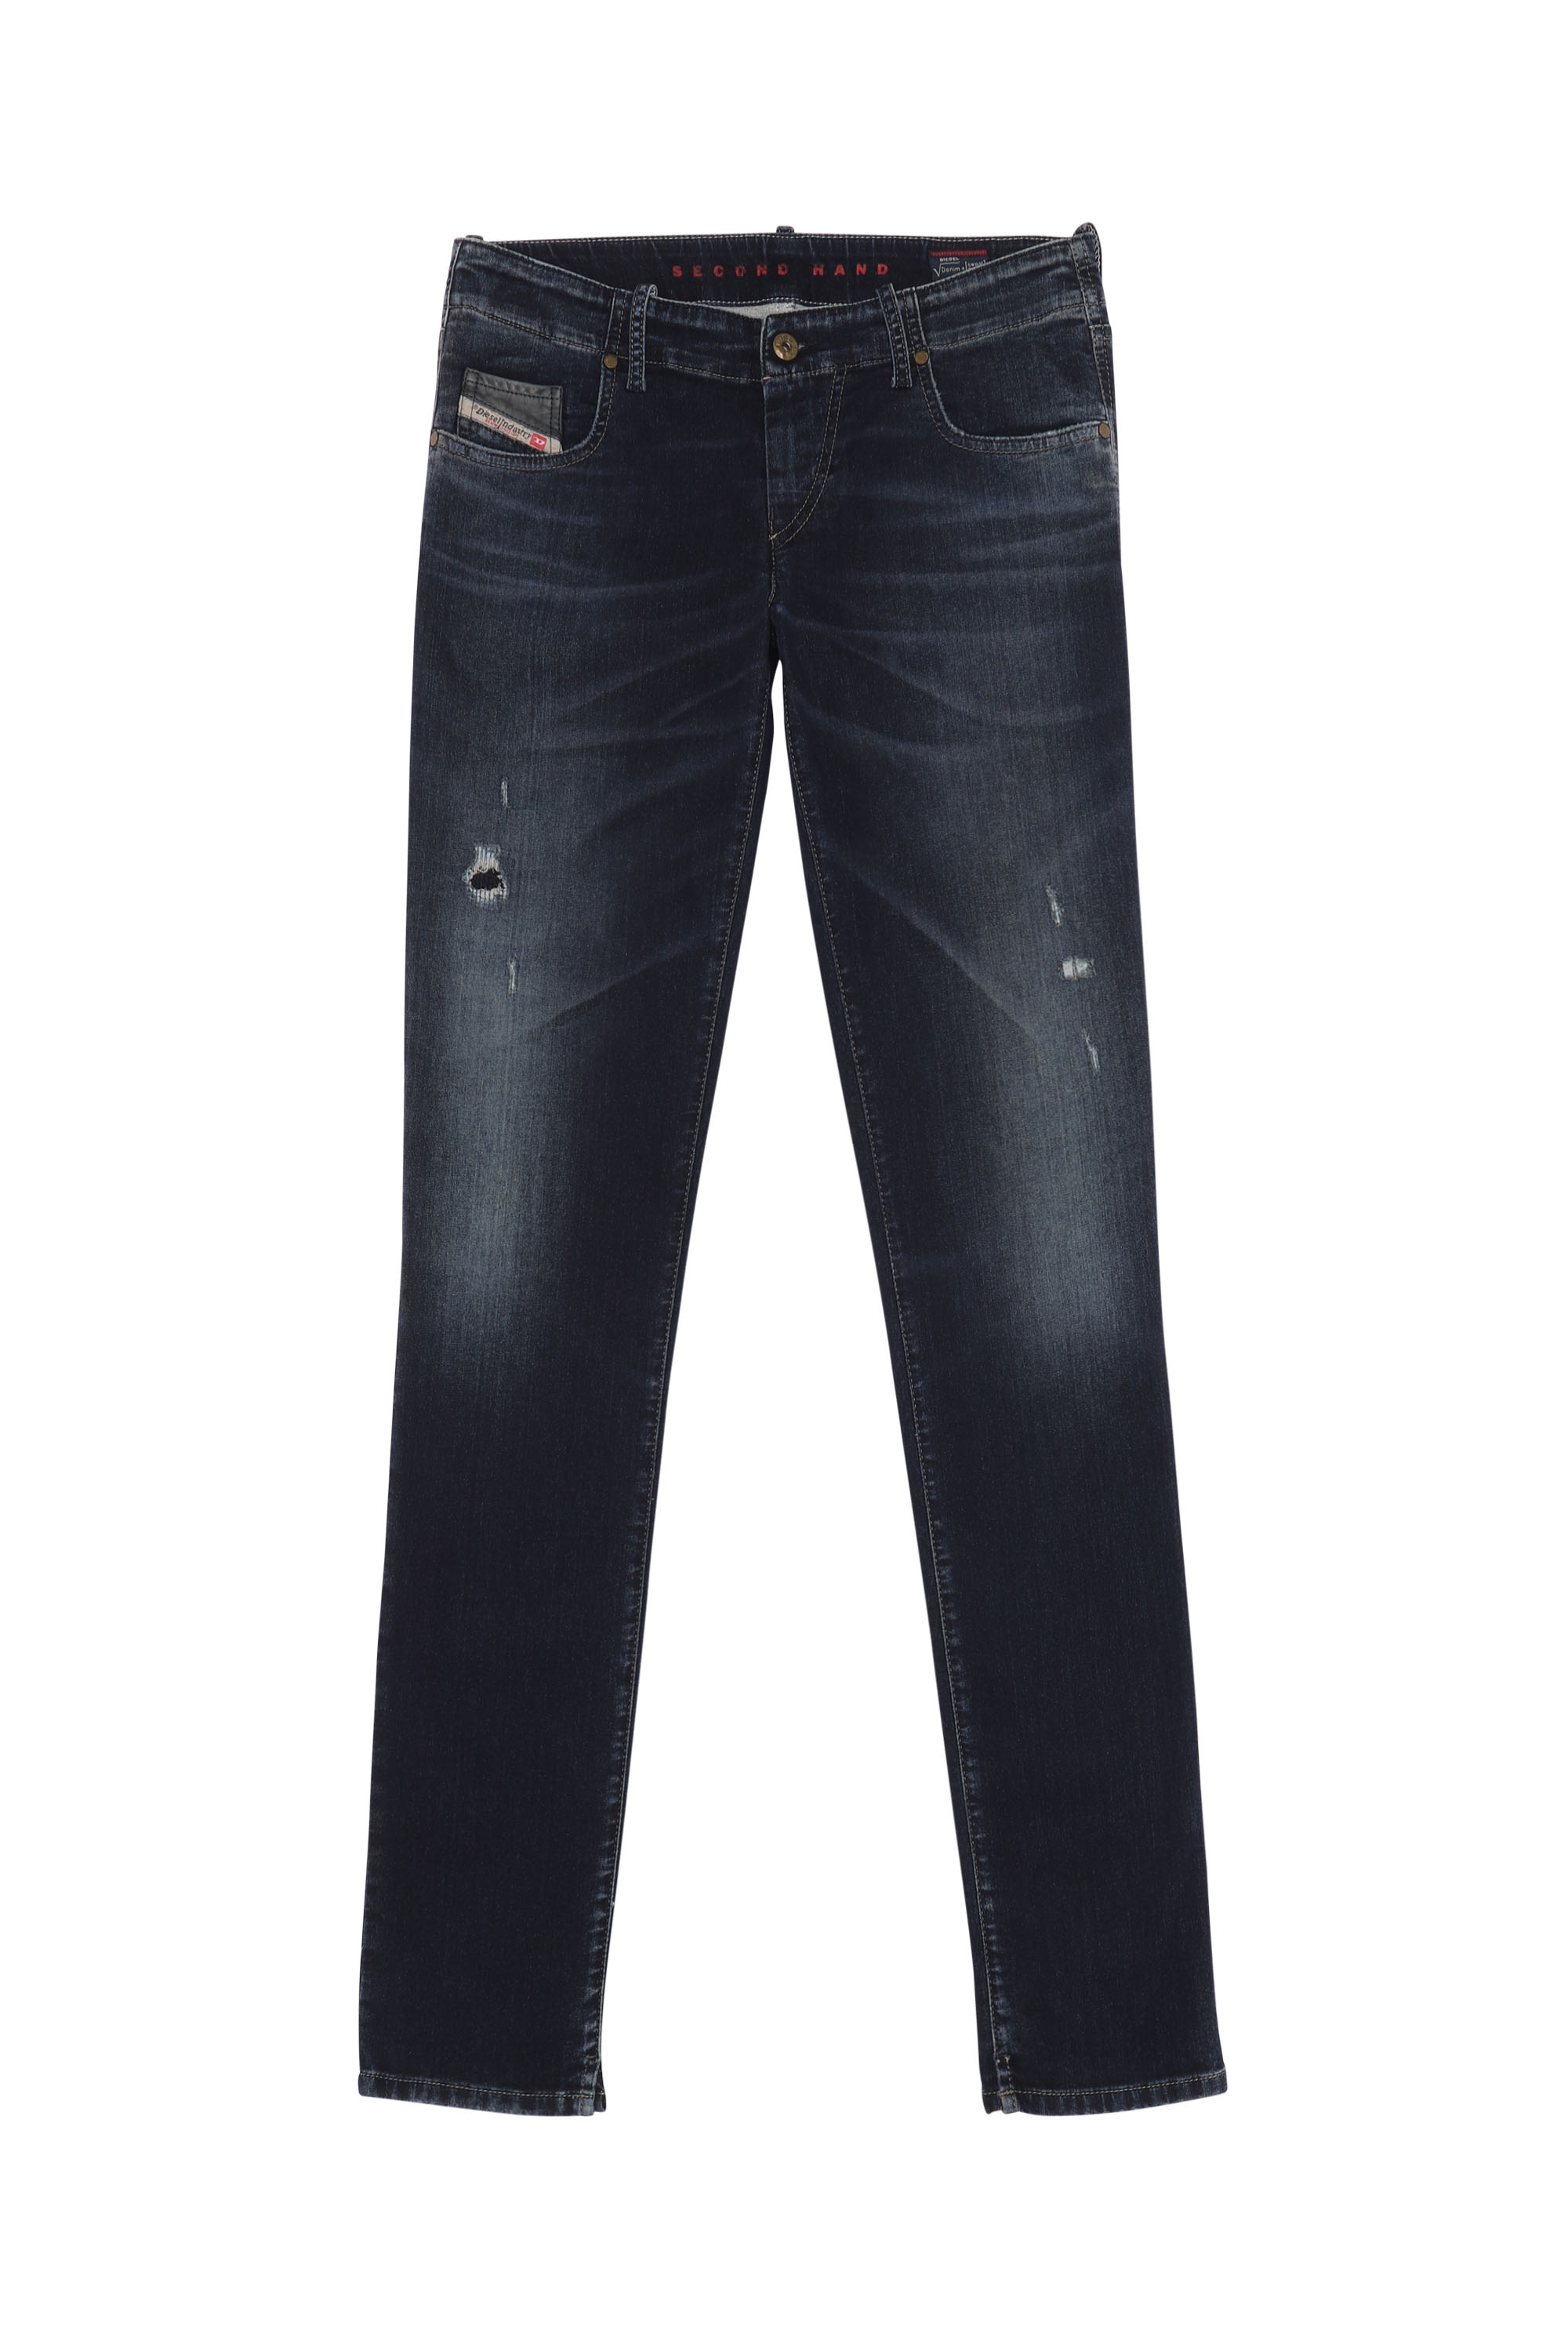 GRUPEE JoggJeans®, Dark Blue - Jeans